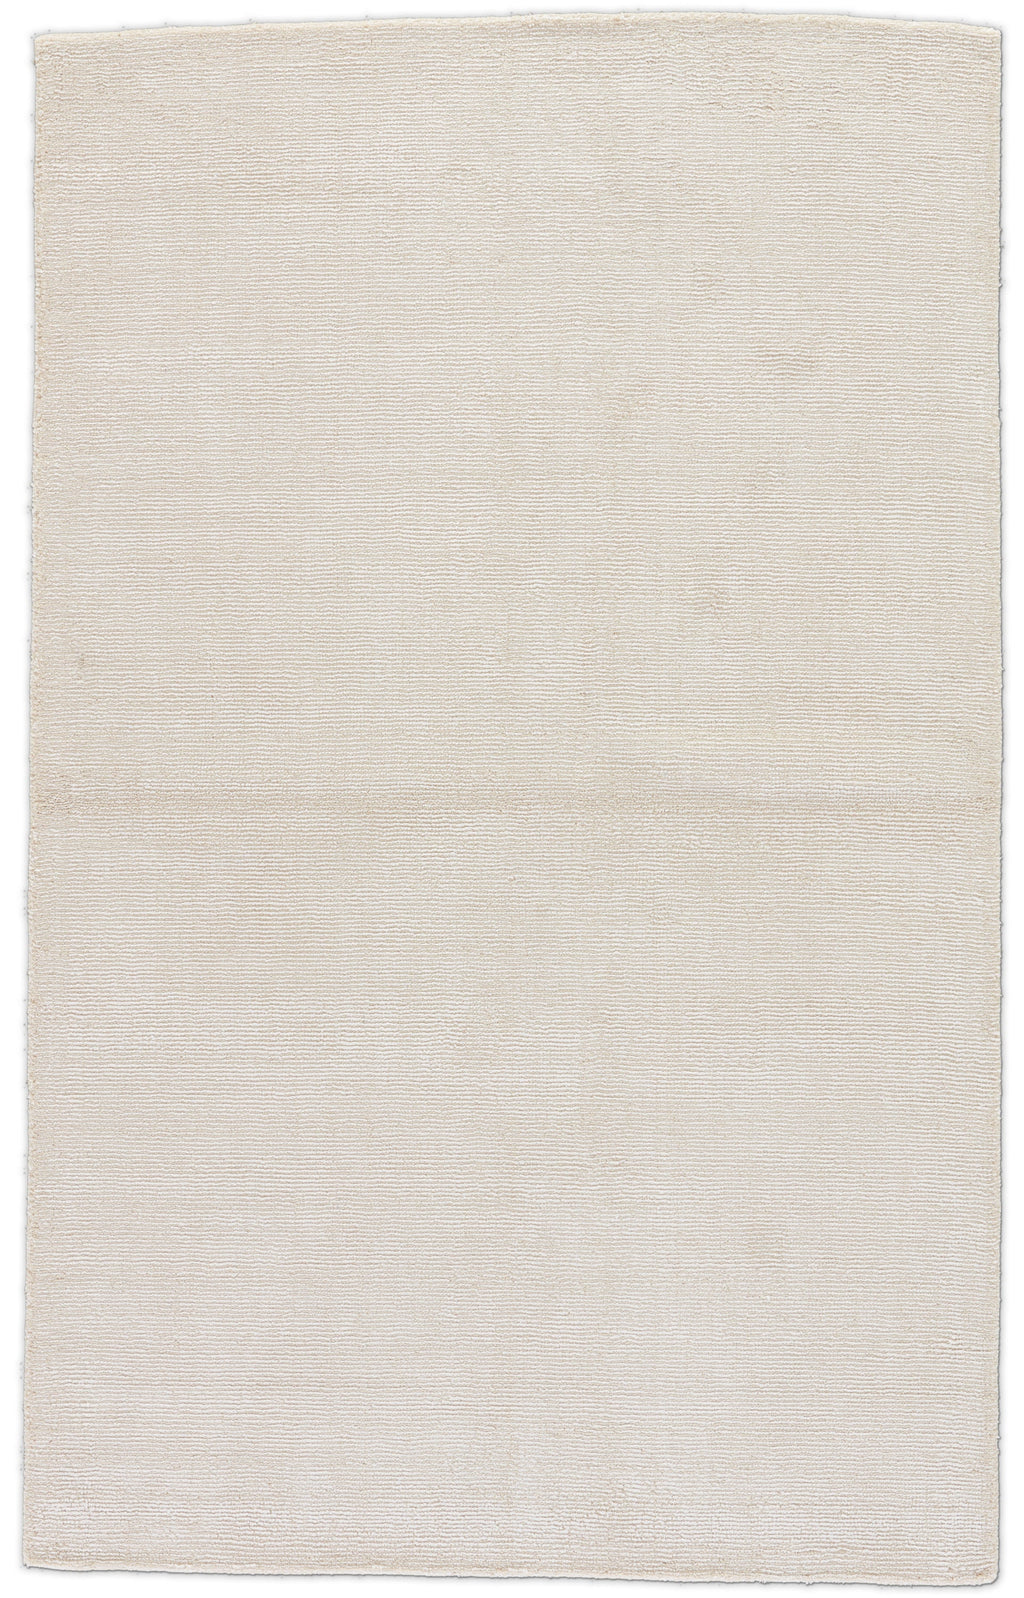 kelle solid rug in blanc de blanc sandshell design by jaipur 1